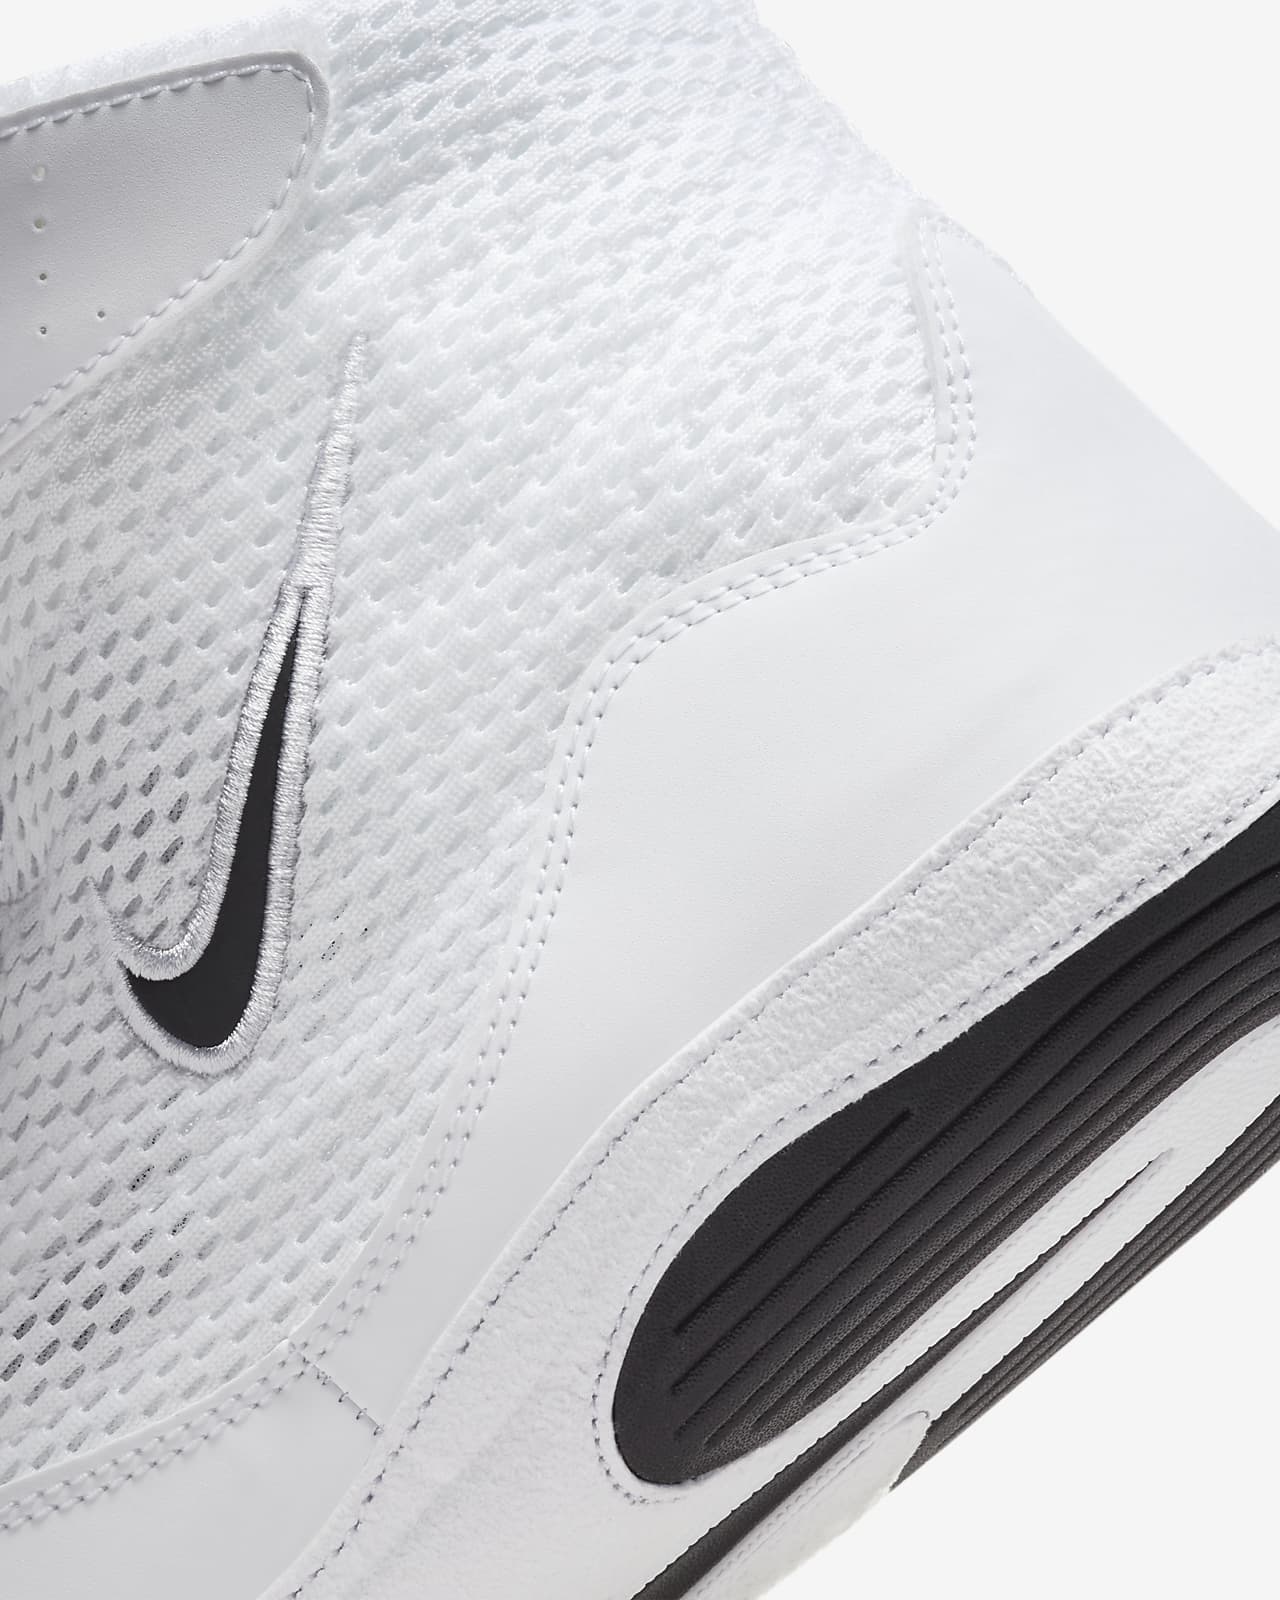 Colin Kaepernick: Nike shoe price soars after ex-QB's request